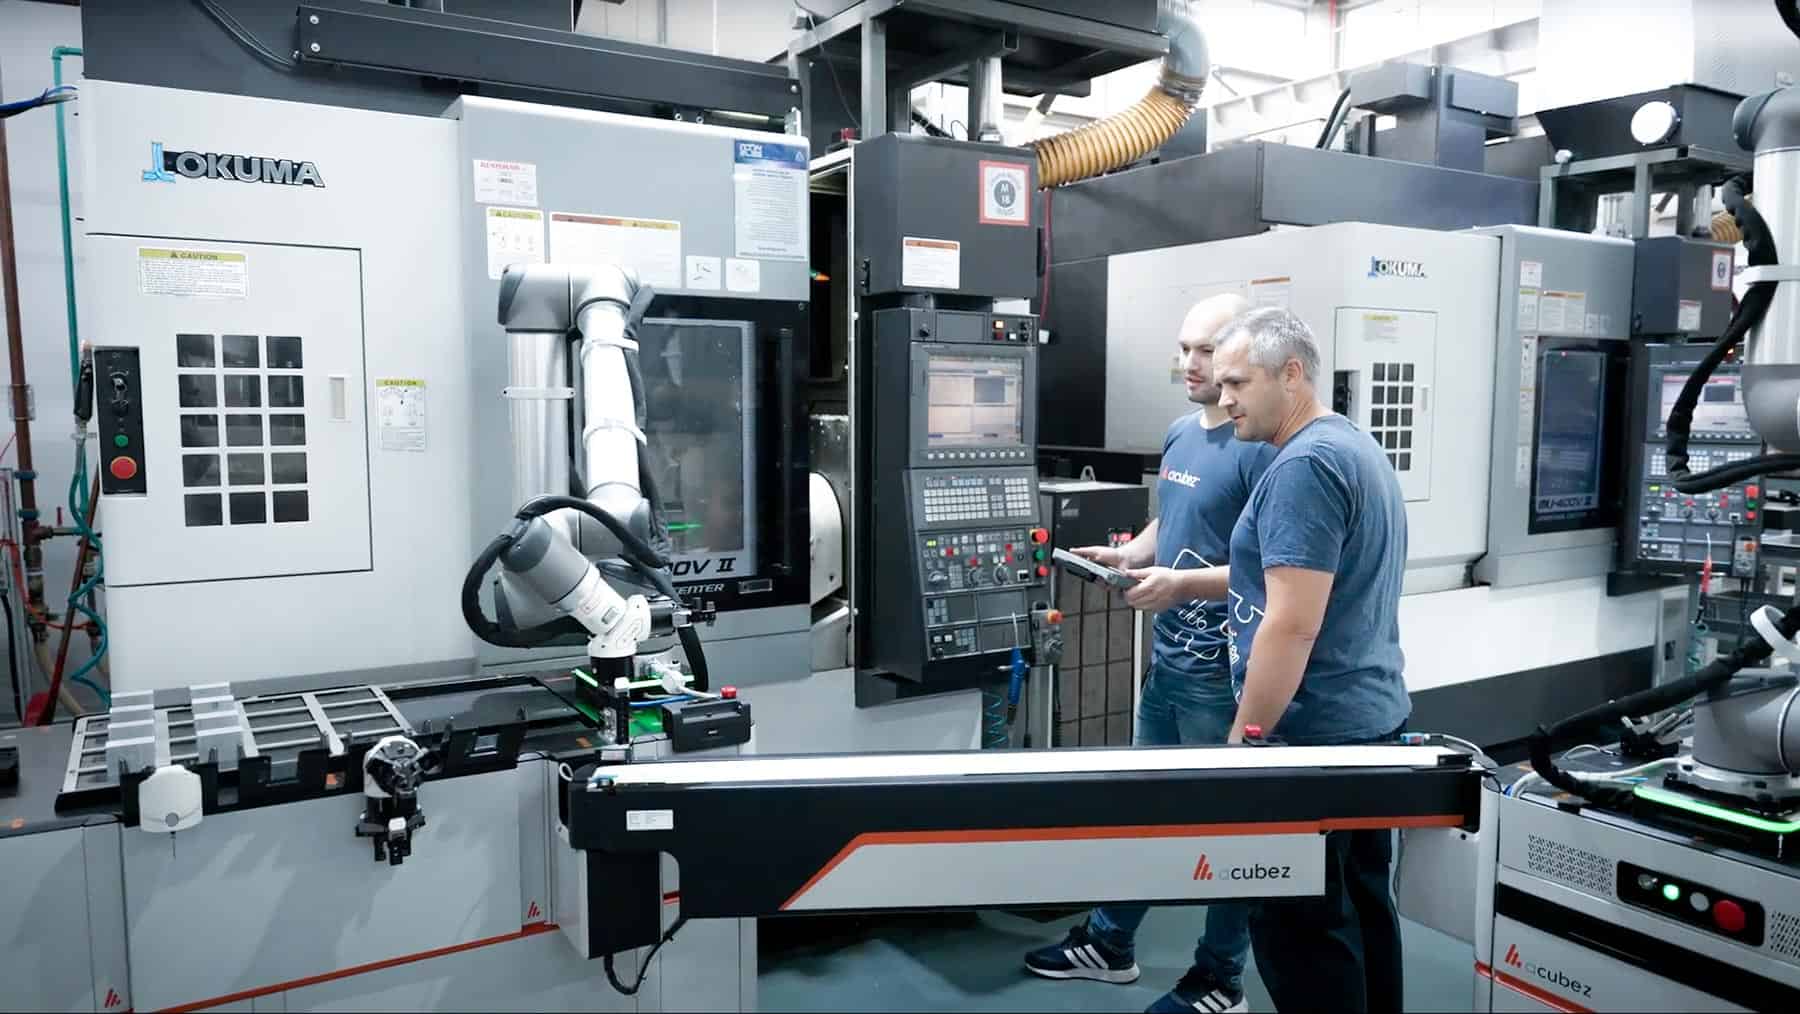 acubez™ CNC conveyor connecting two automation platforms